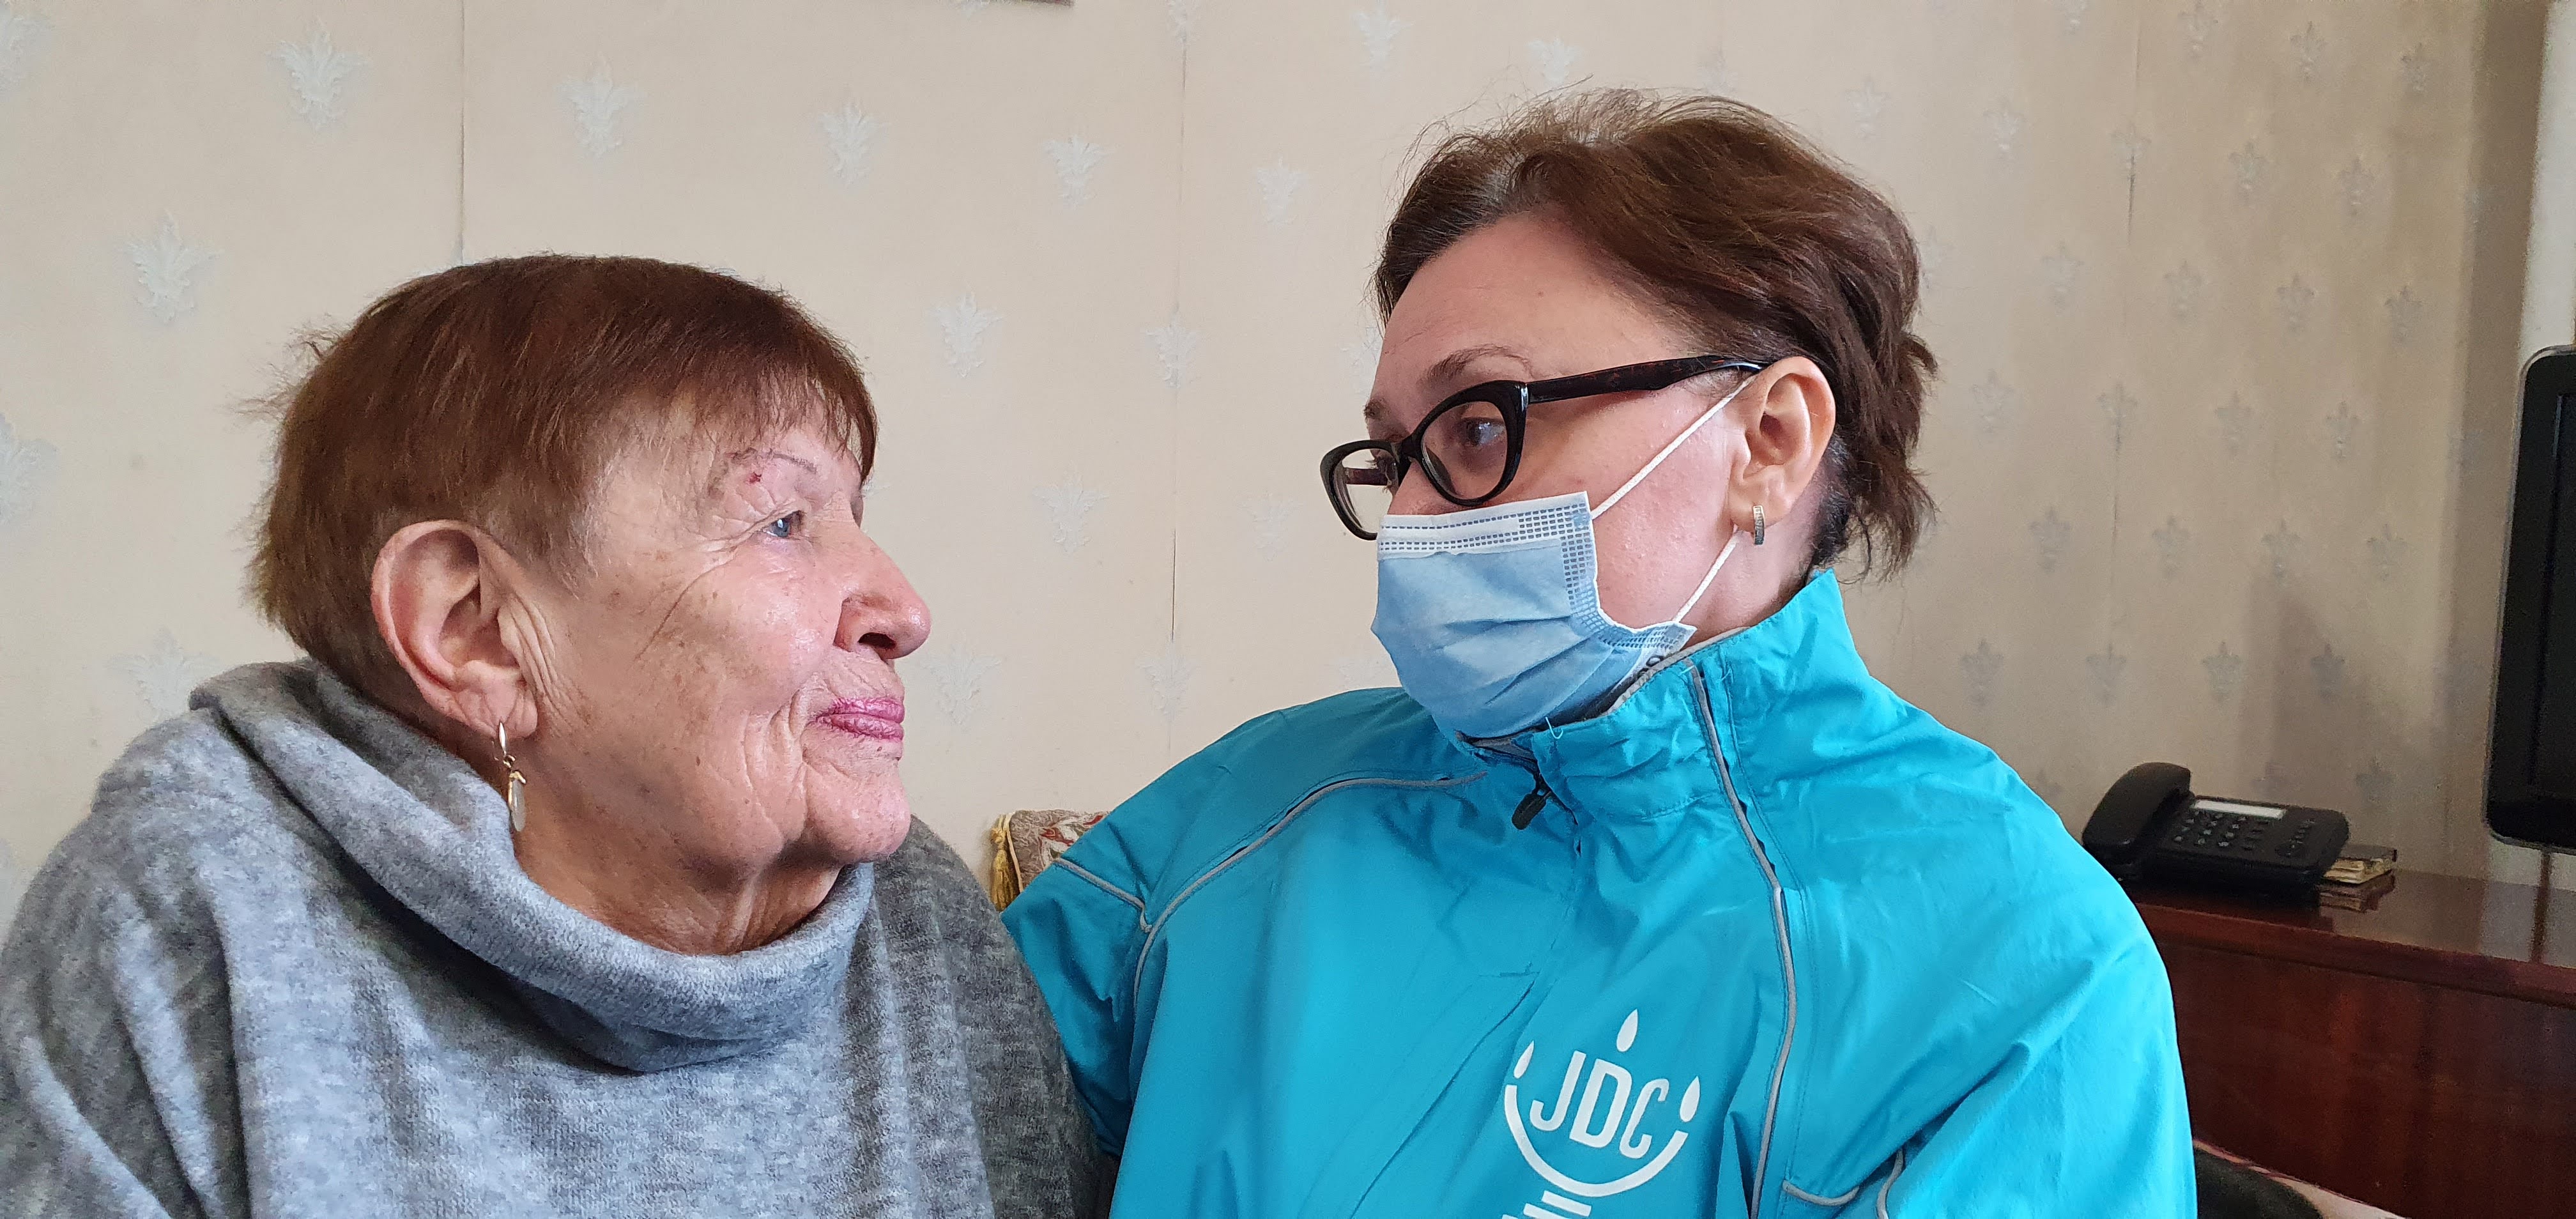 Inna Vdovichenko (right), who works for the Jewish humanitarian organization JDC, visits Holocaust survivor Natalia Berezhnaya on Feb 28. in Odessa, Ukraine. (Courtesy of the JDC)